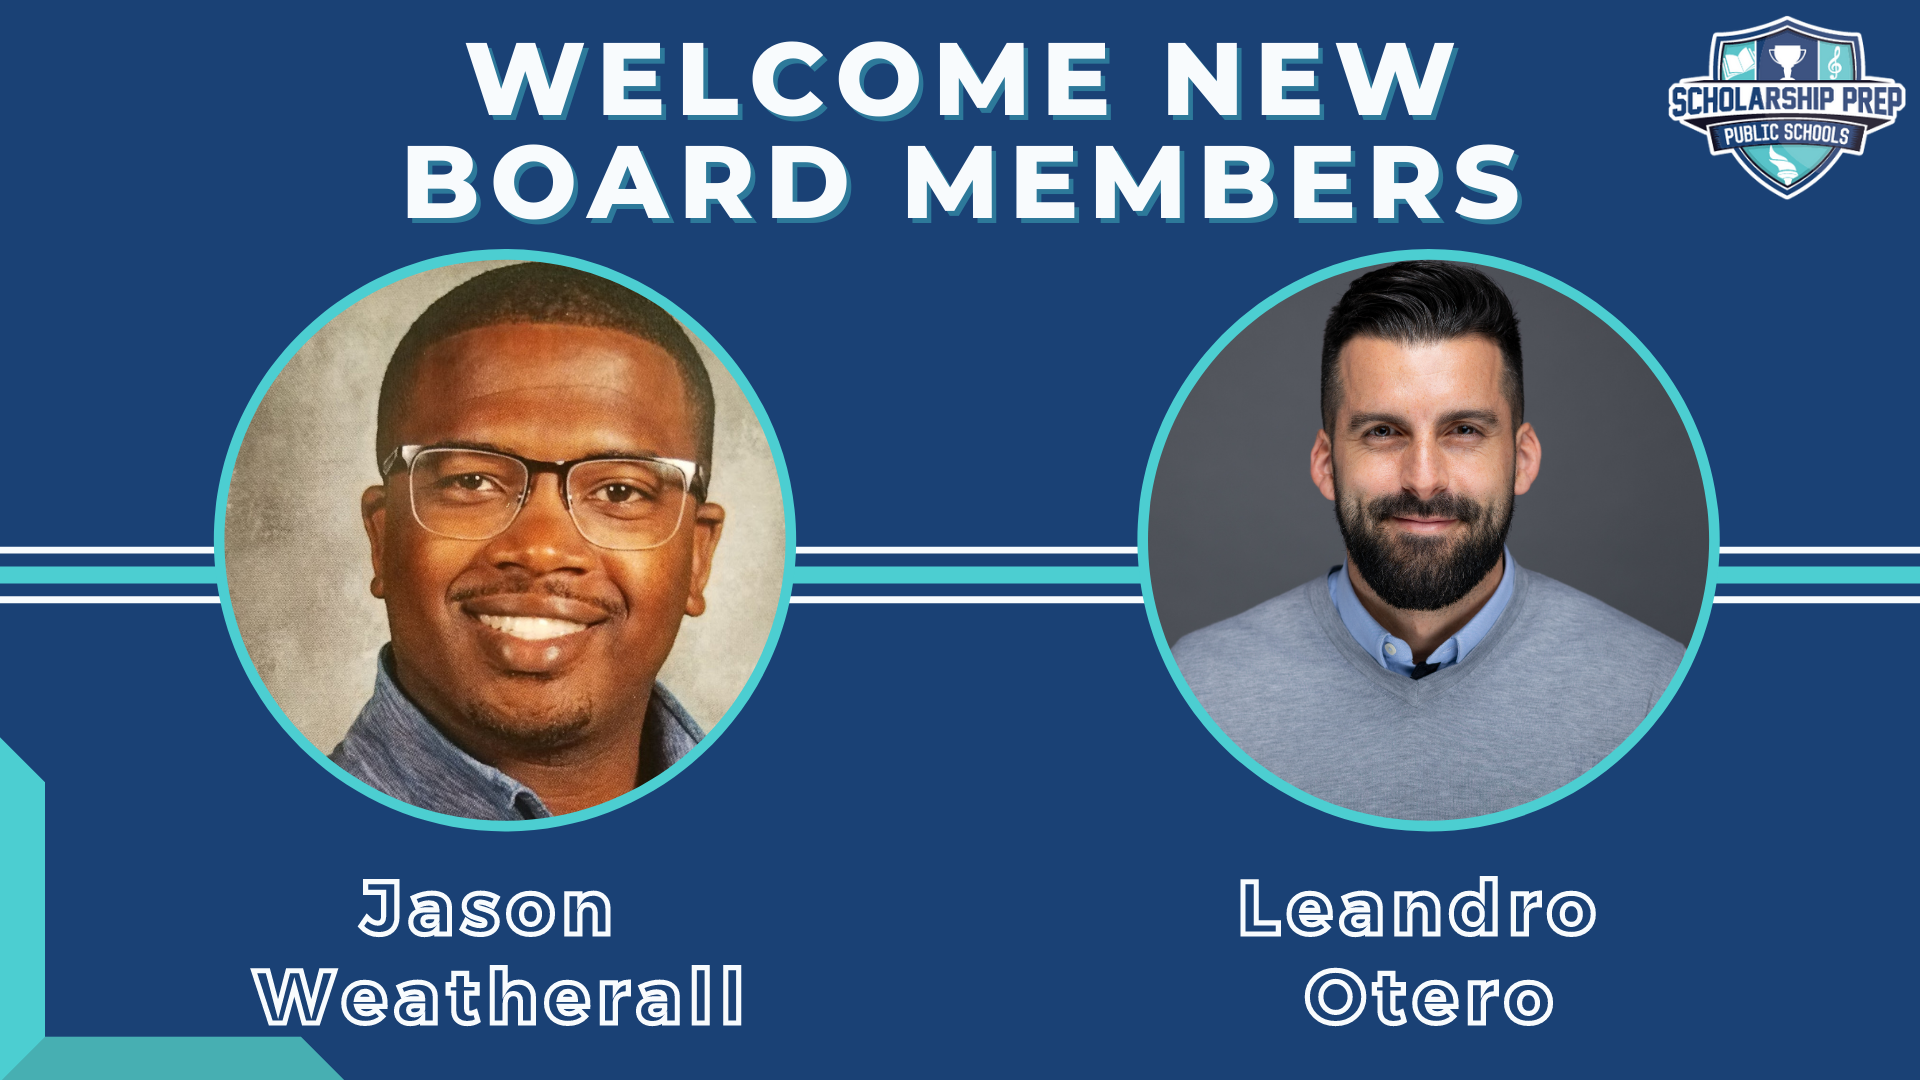 New Board Members Jason Weatherall and Leandro Otero